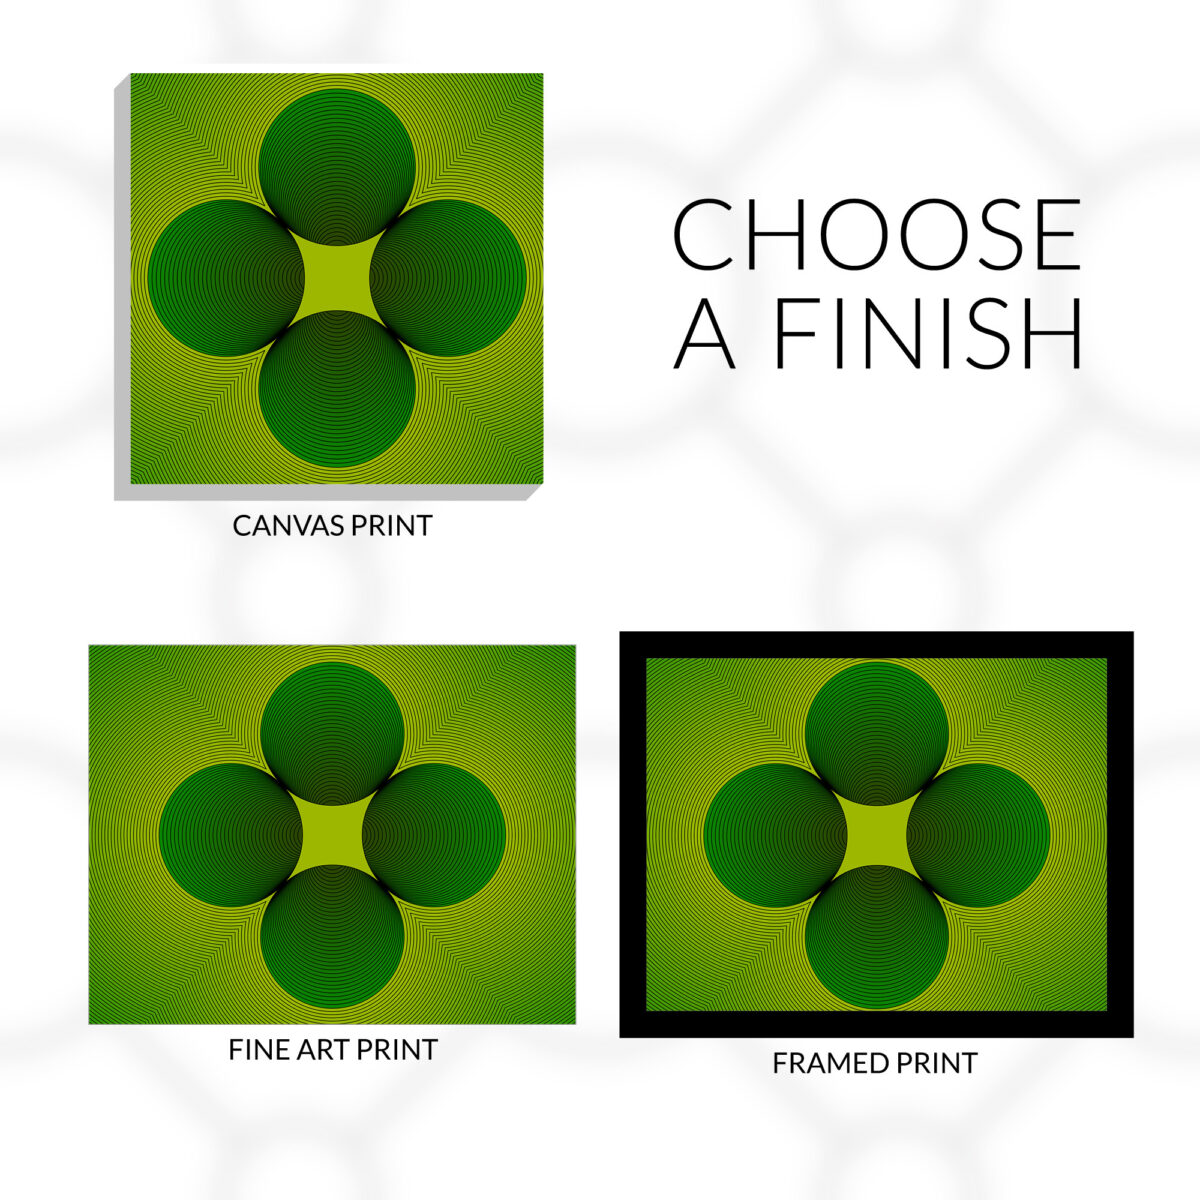 Clover design choose a finish. Canvas print, fine art print, or framed fine art print.